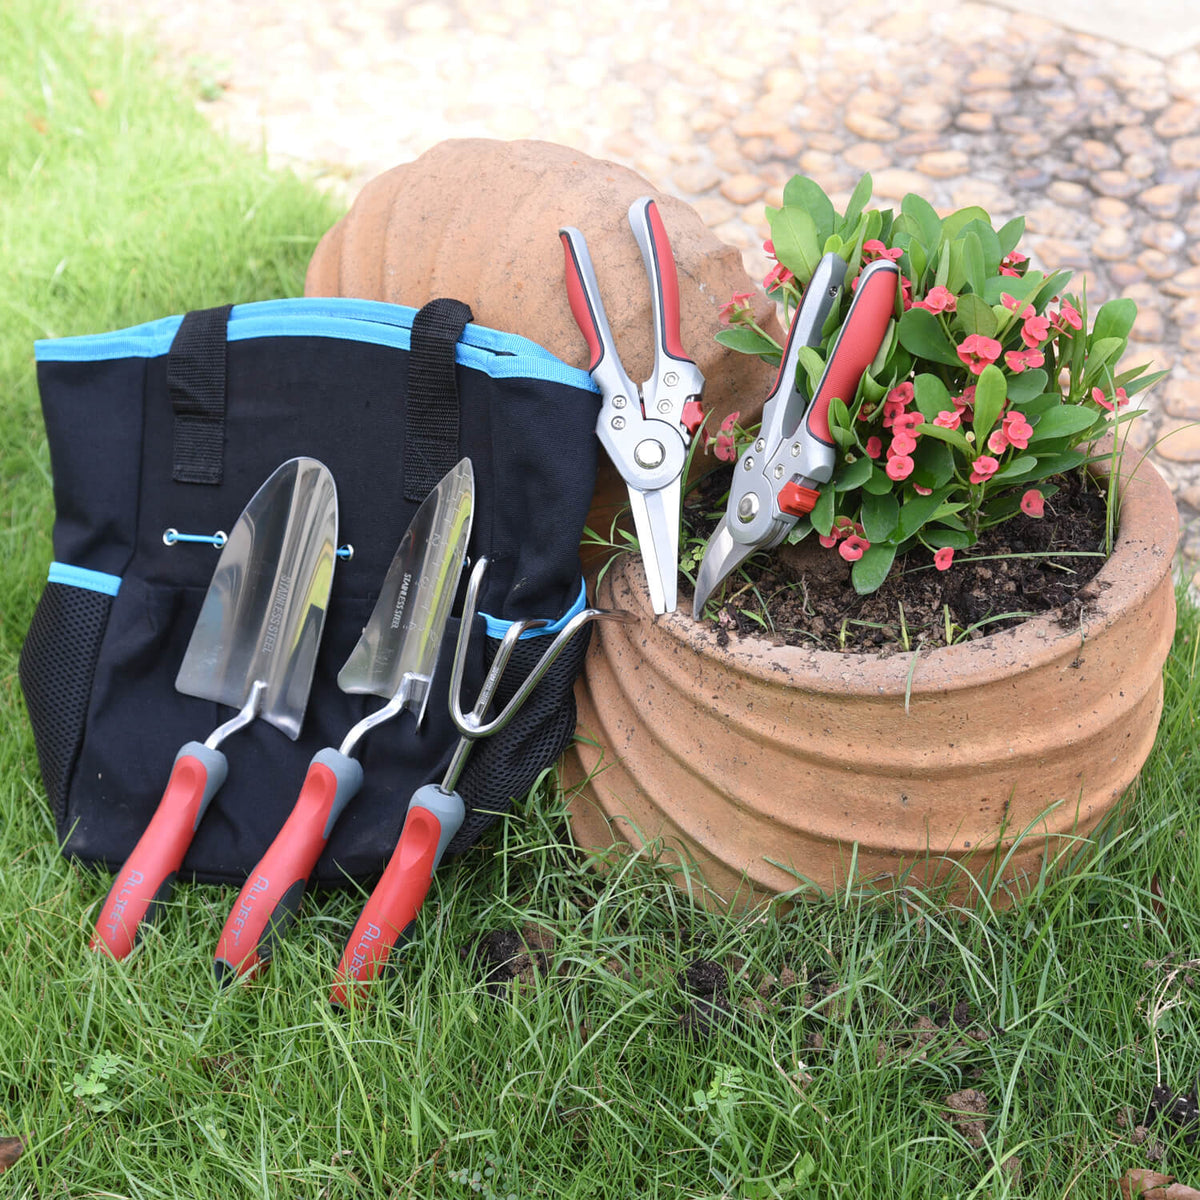 stainless steel garden tool set with storage bag near garden pot